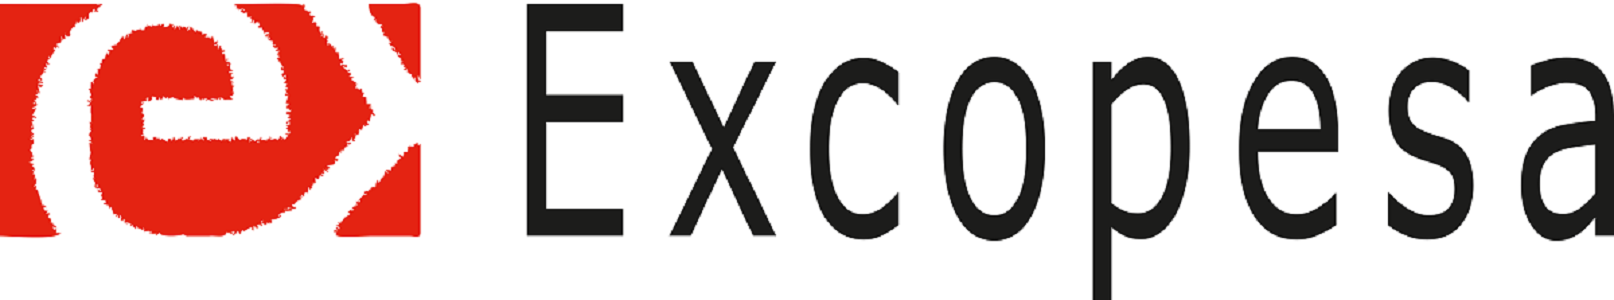 Excopesa logo